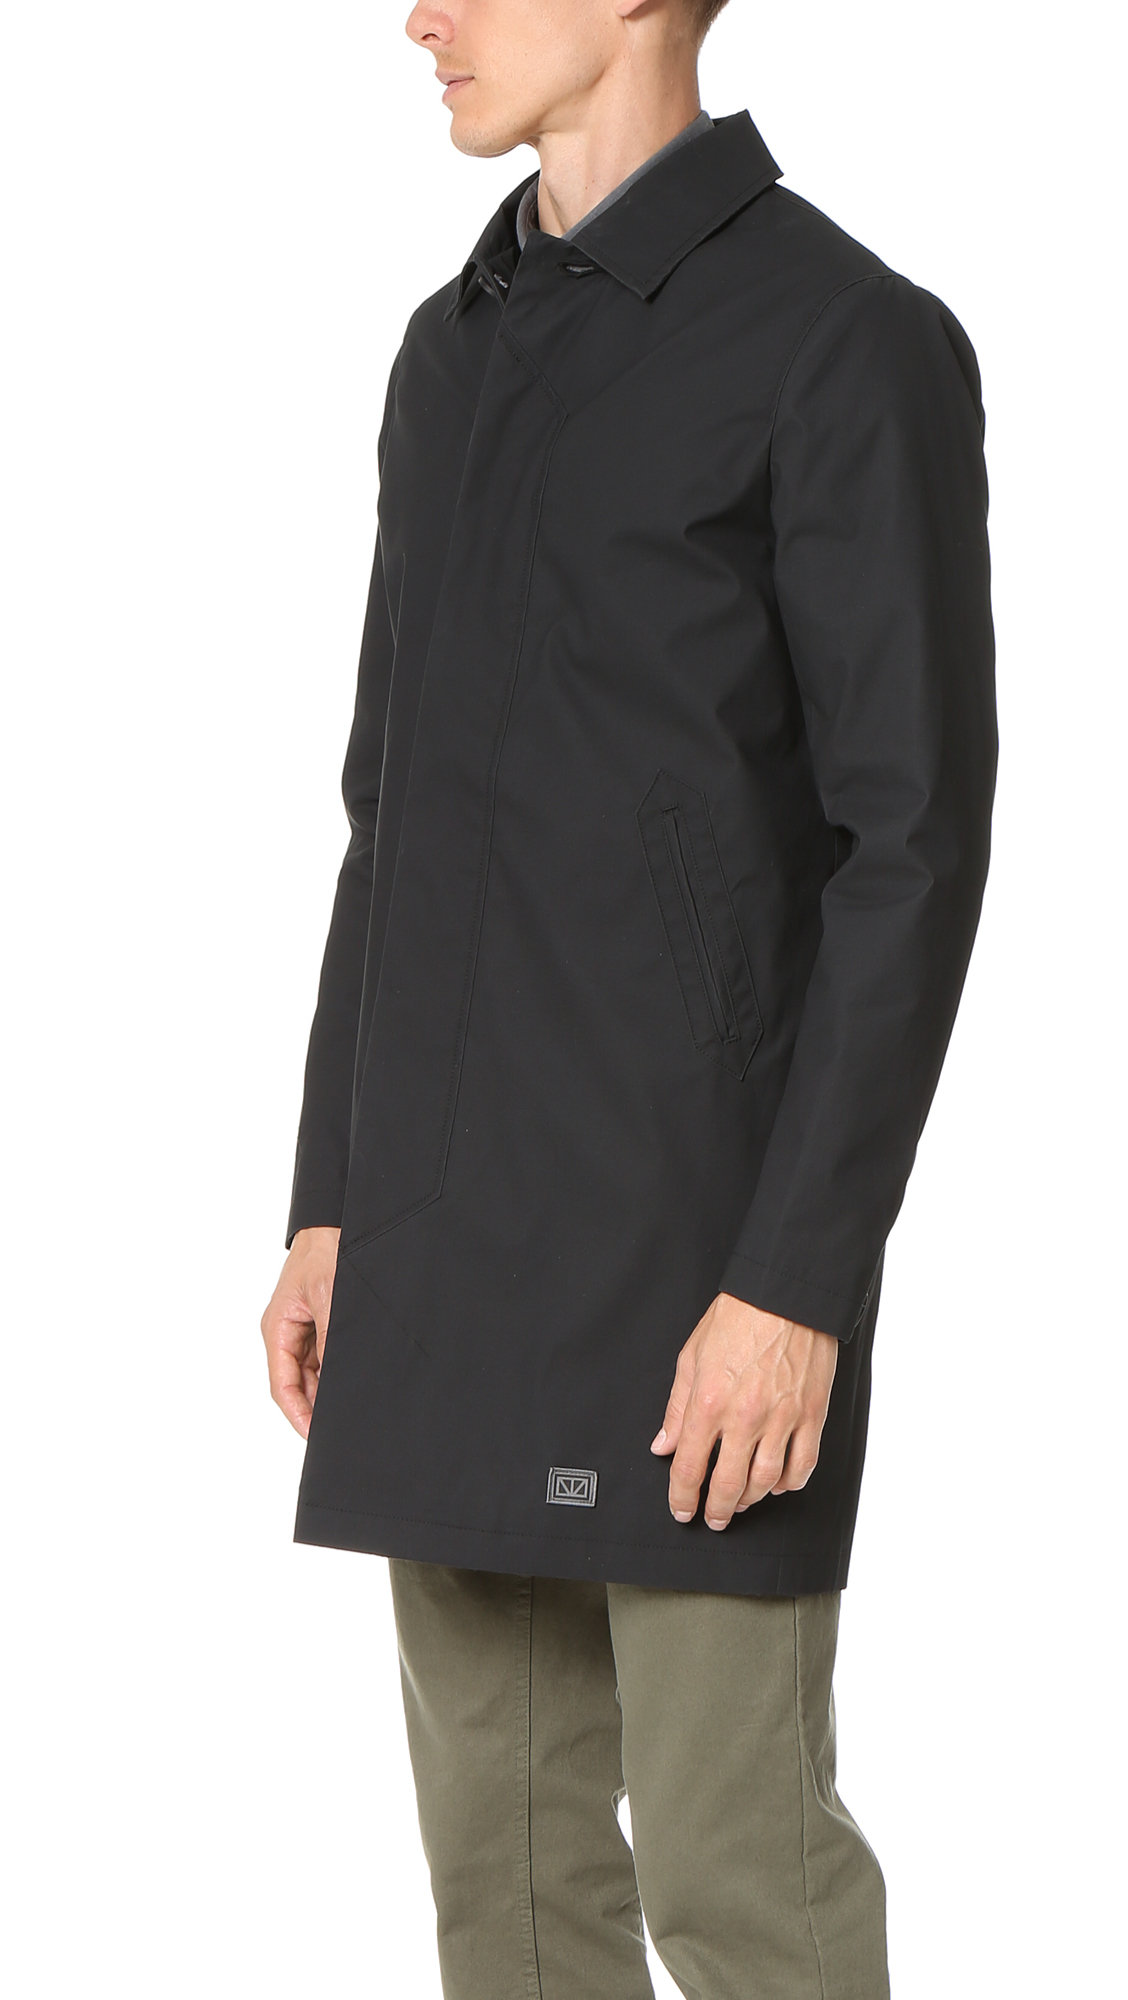 Brixtol Wool T Coat in Black for Men - Lyst